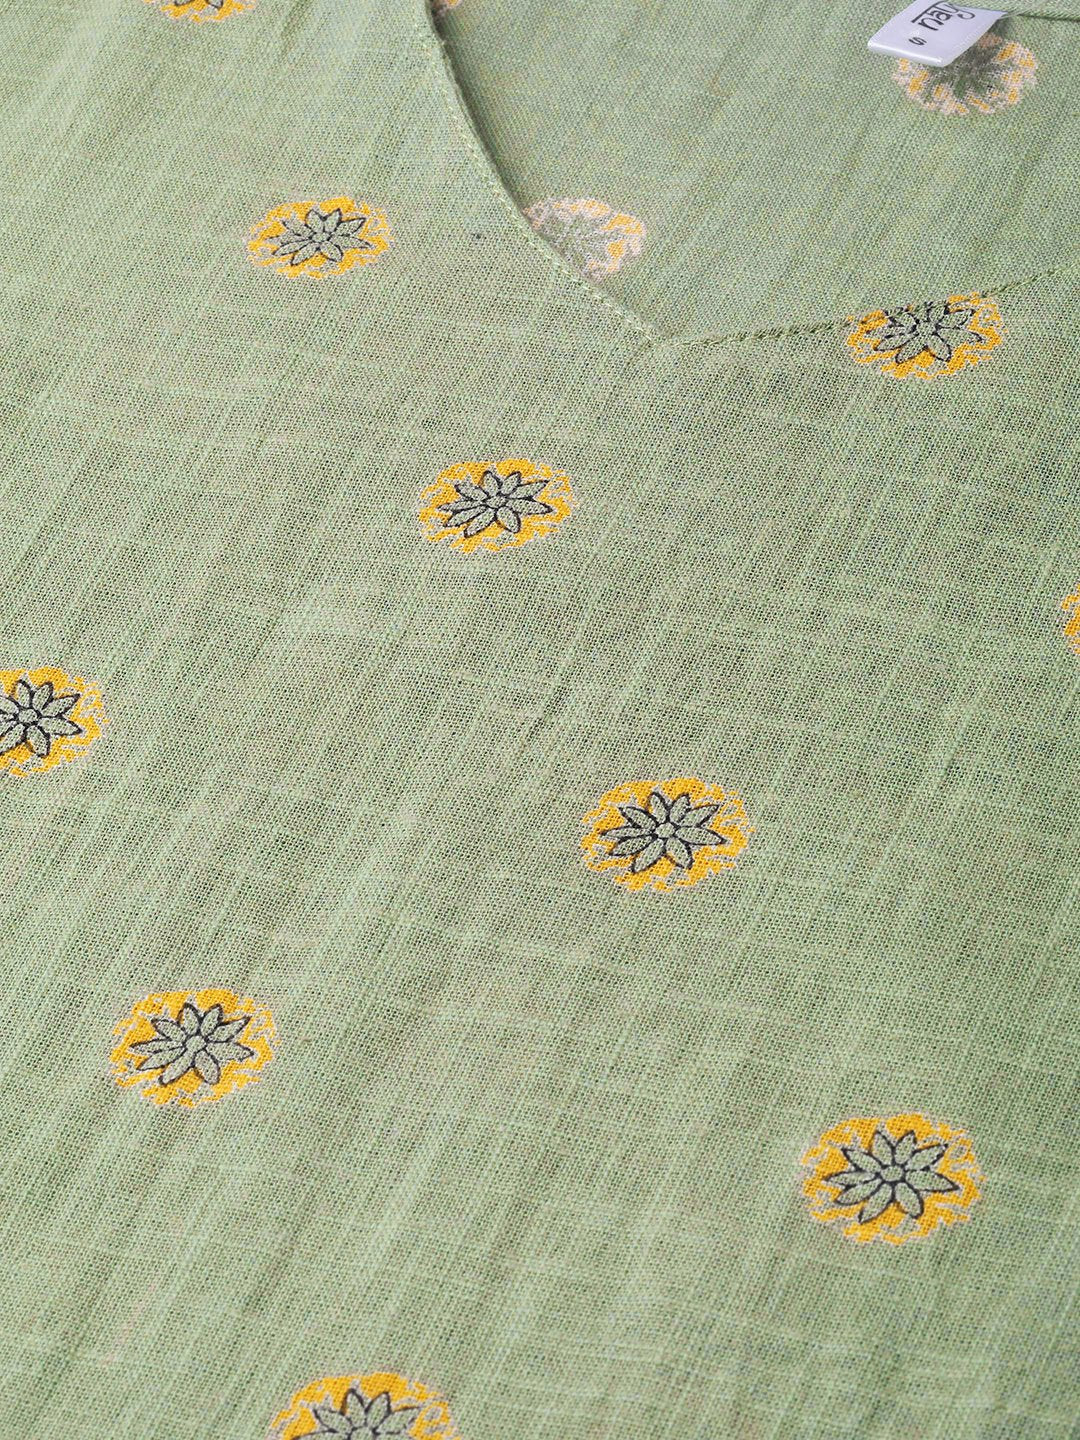 Women's Nayo Green & Yellow Cotton Straight Floral Printed Kurta - Nayo Clothing